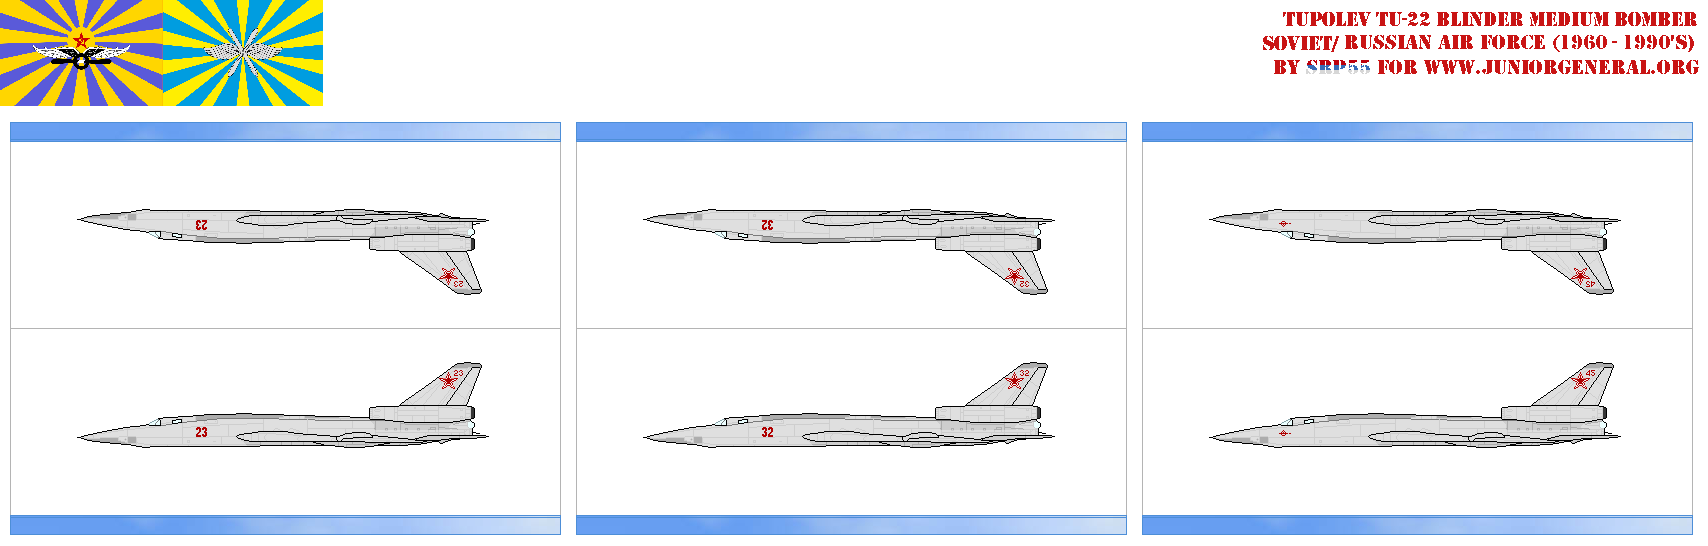 Soviet Tupolev Tu-22 Blinder